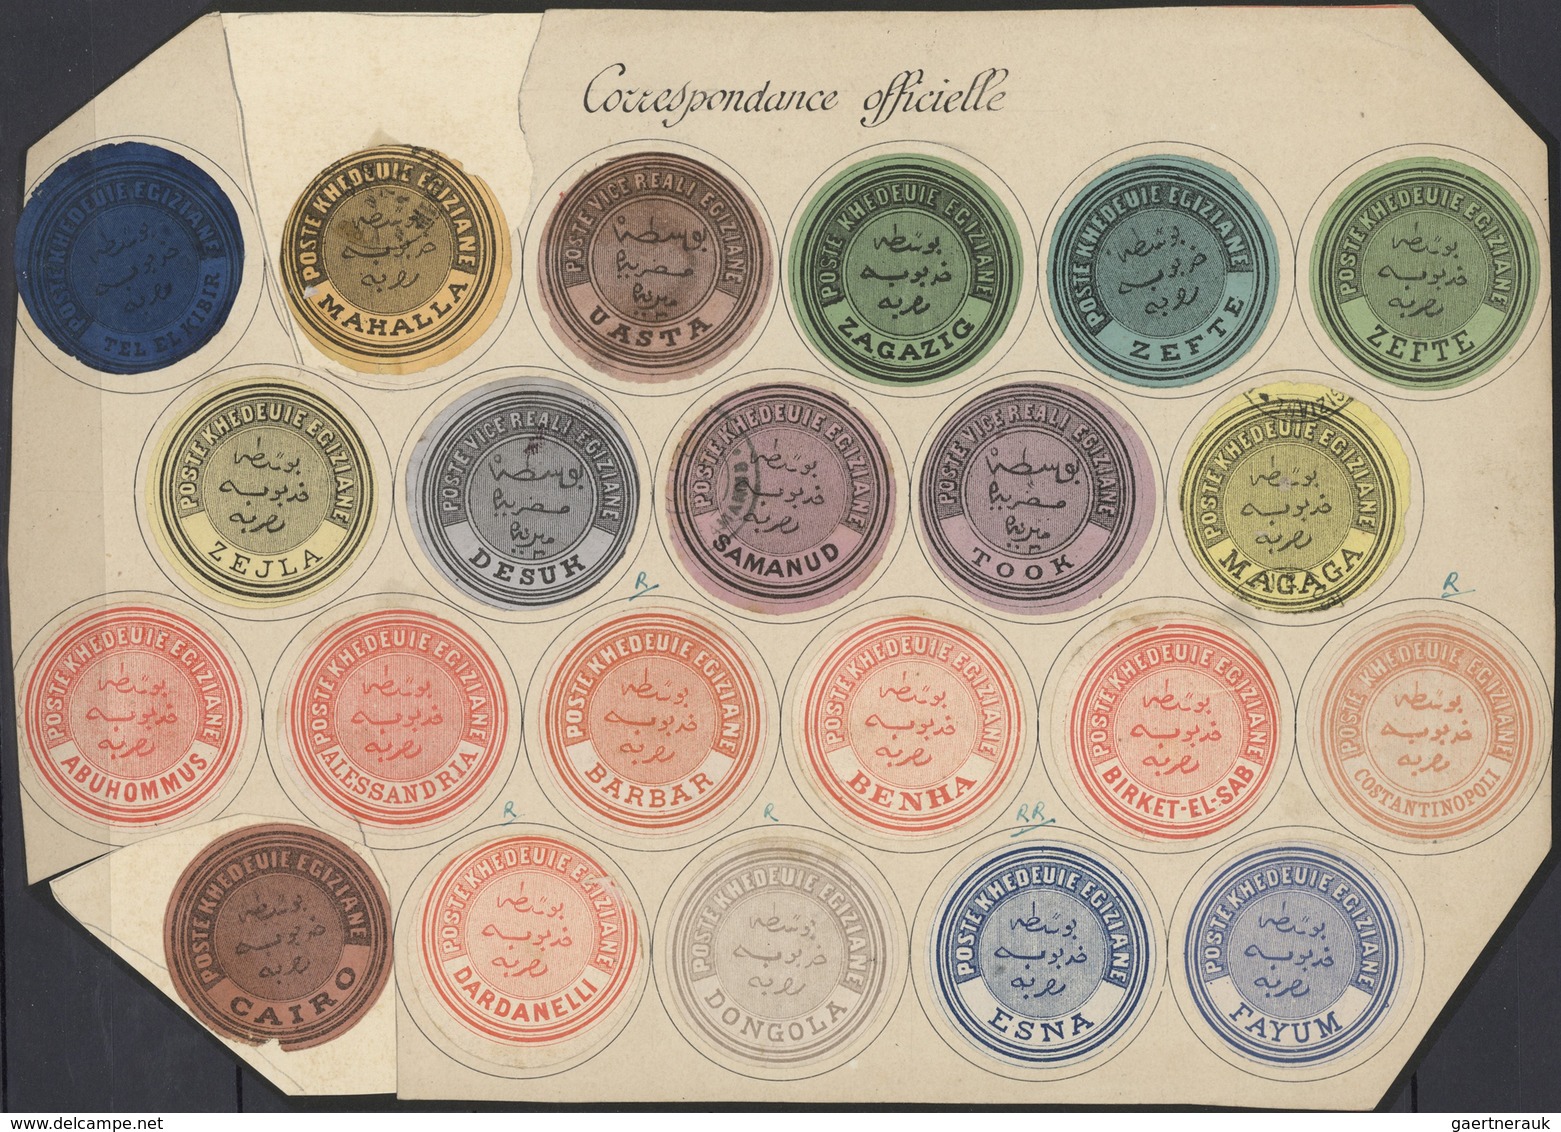 (*)/O Ägypten - Dienstmarken: 1864/1892 (ca.), INTERPOSTALS, collection of apprx. 148 interpostal seals in